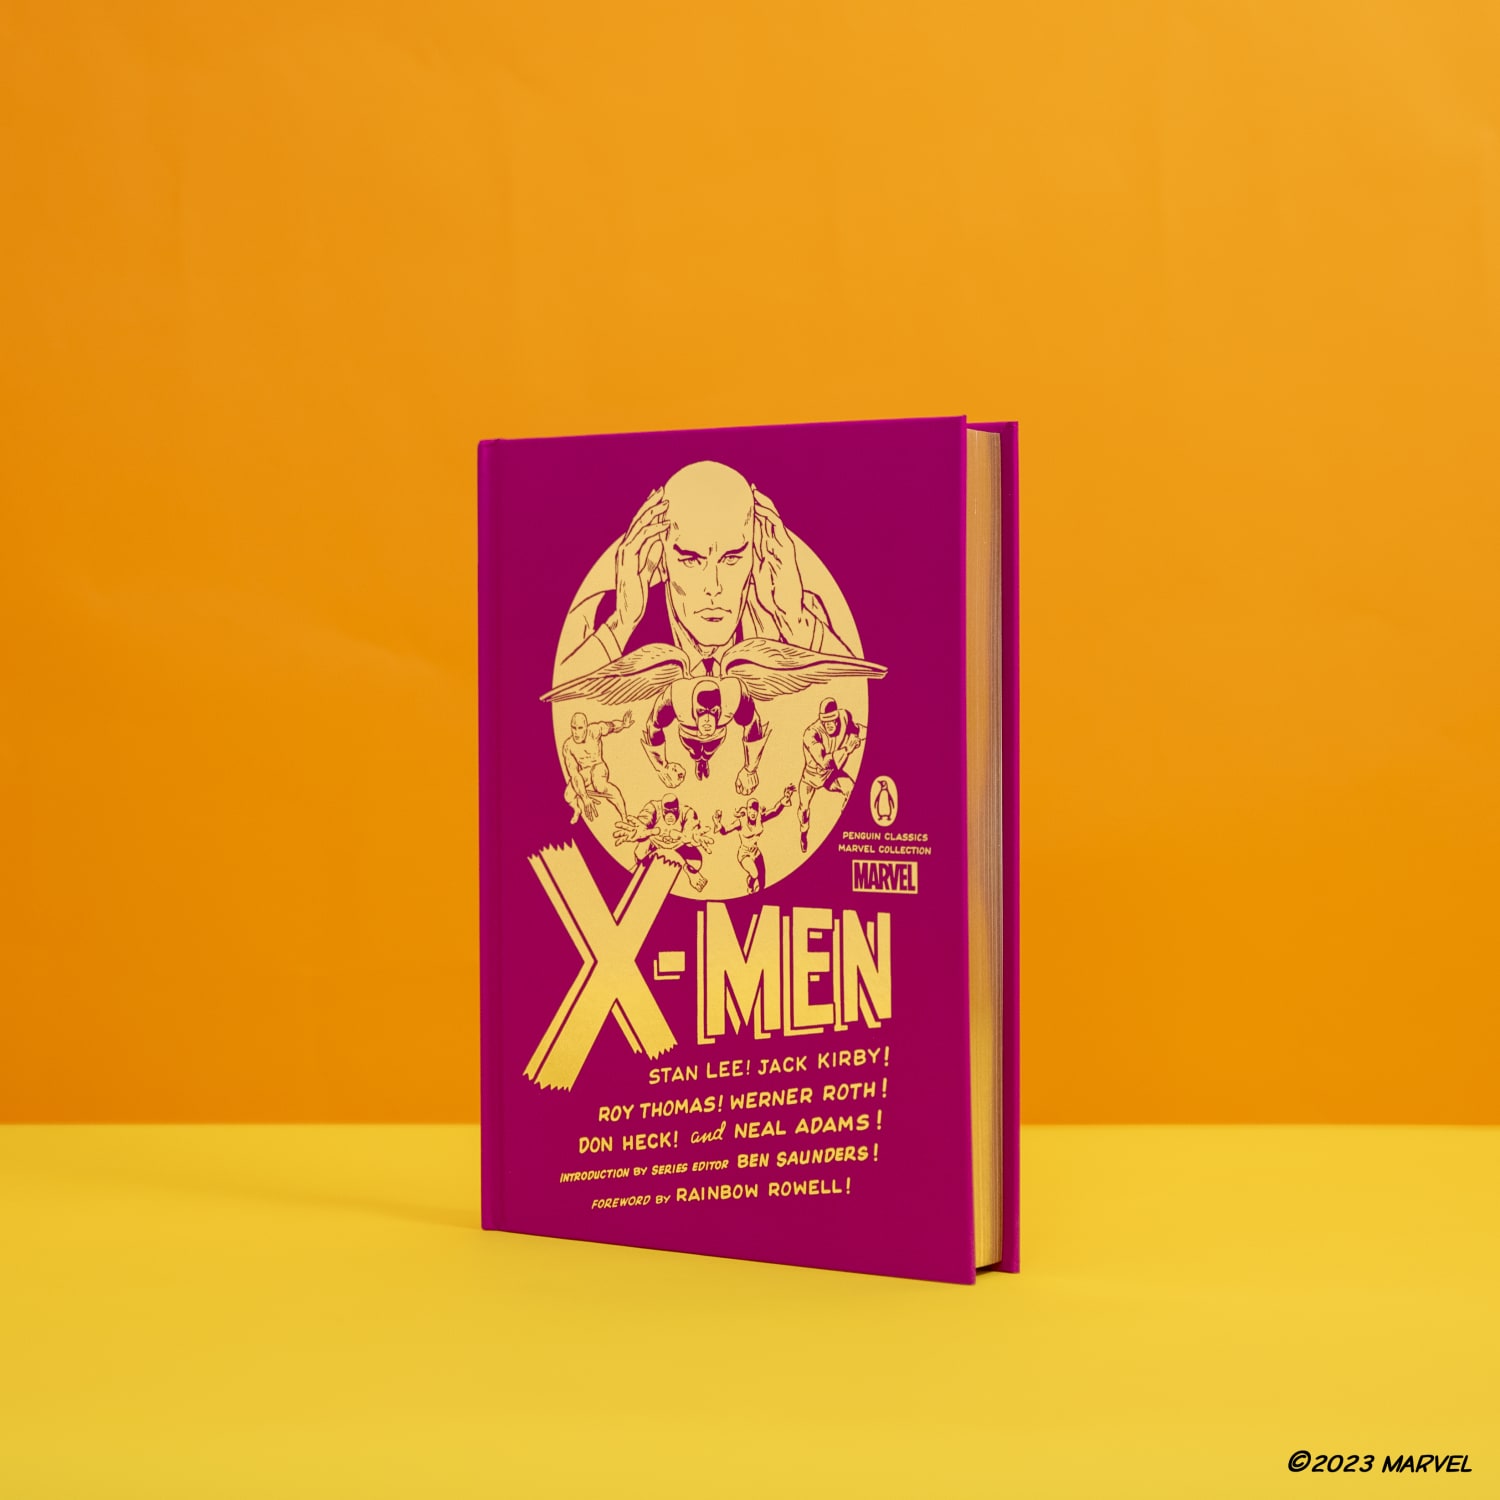 X-Men hardcover edition standing against orange background